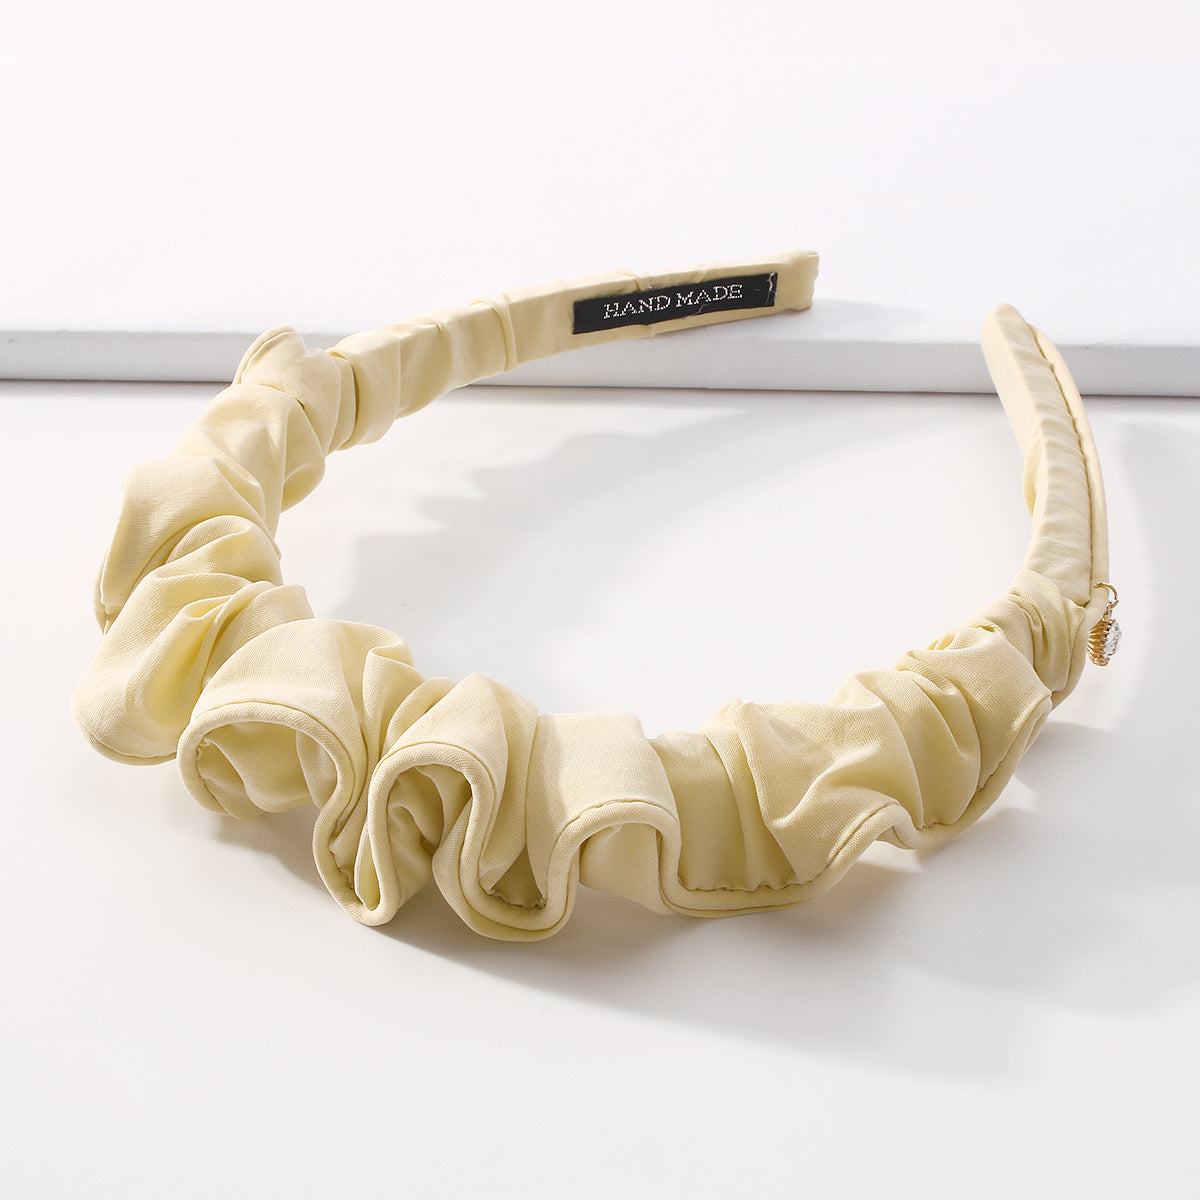 Retro Fold Candy Color Bezel Hairbands medyjewelry